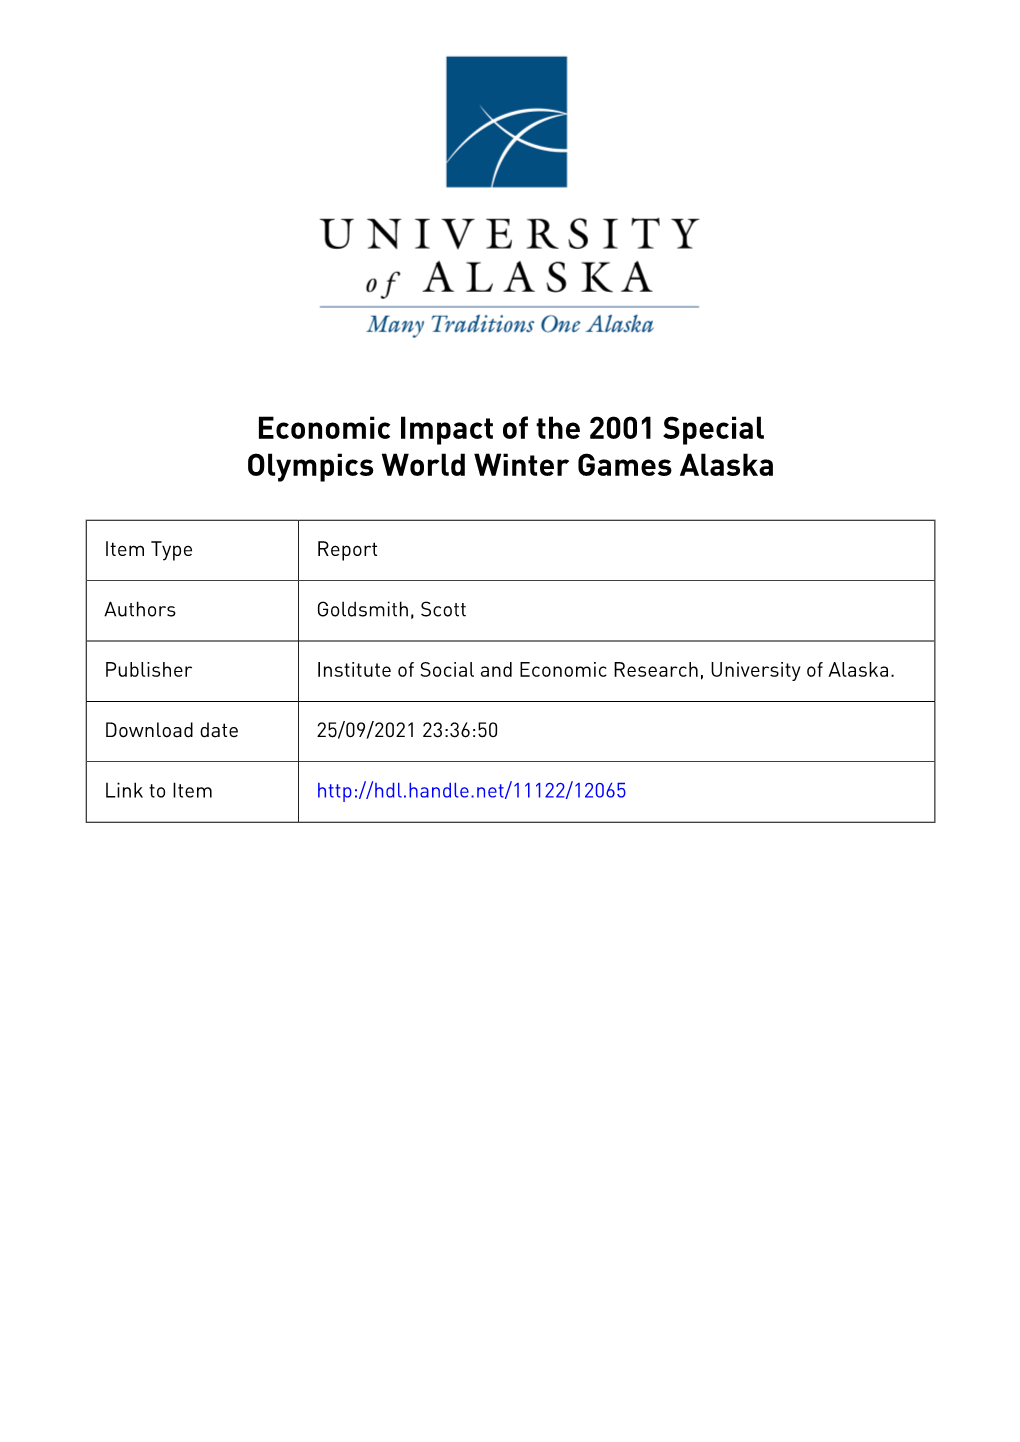 Economic Impact of the 2001 Special Olympics World Winter Games Alaska